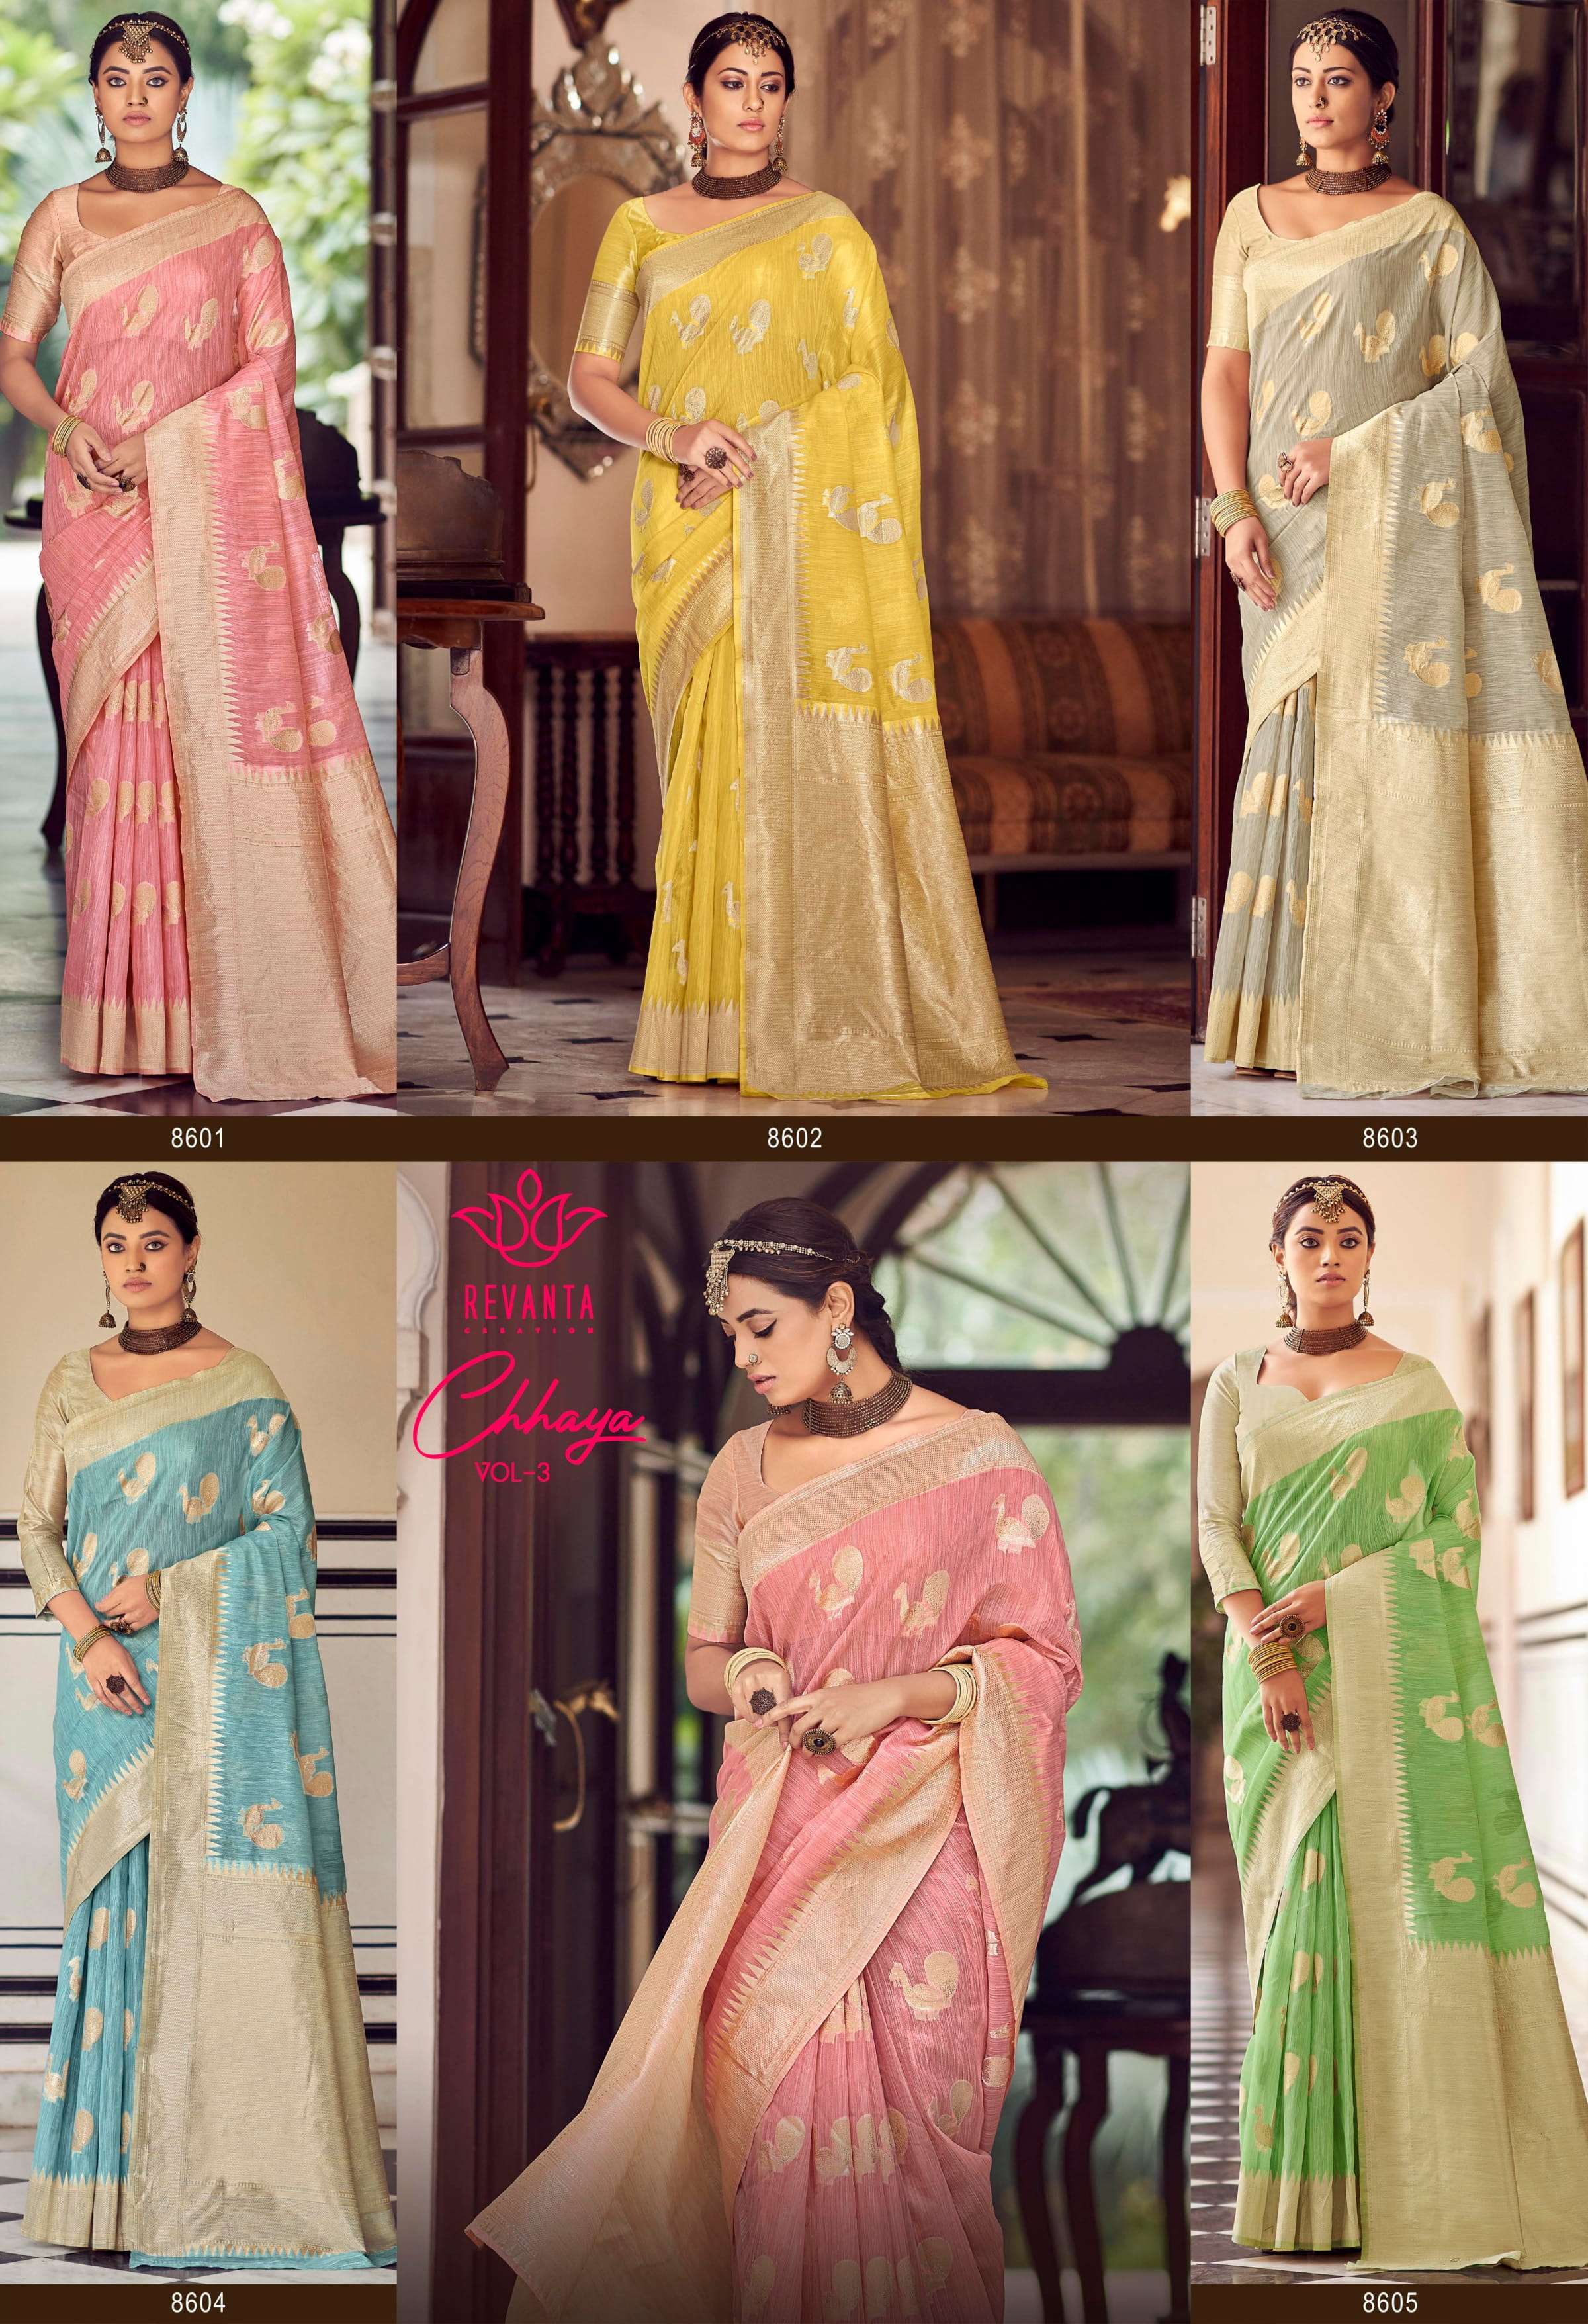 revanta chhaya vol 3 series 8601-8605 pure linen cotton saree